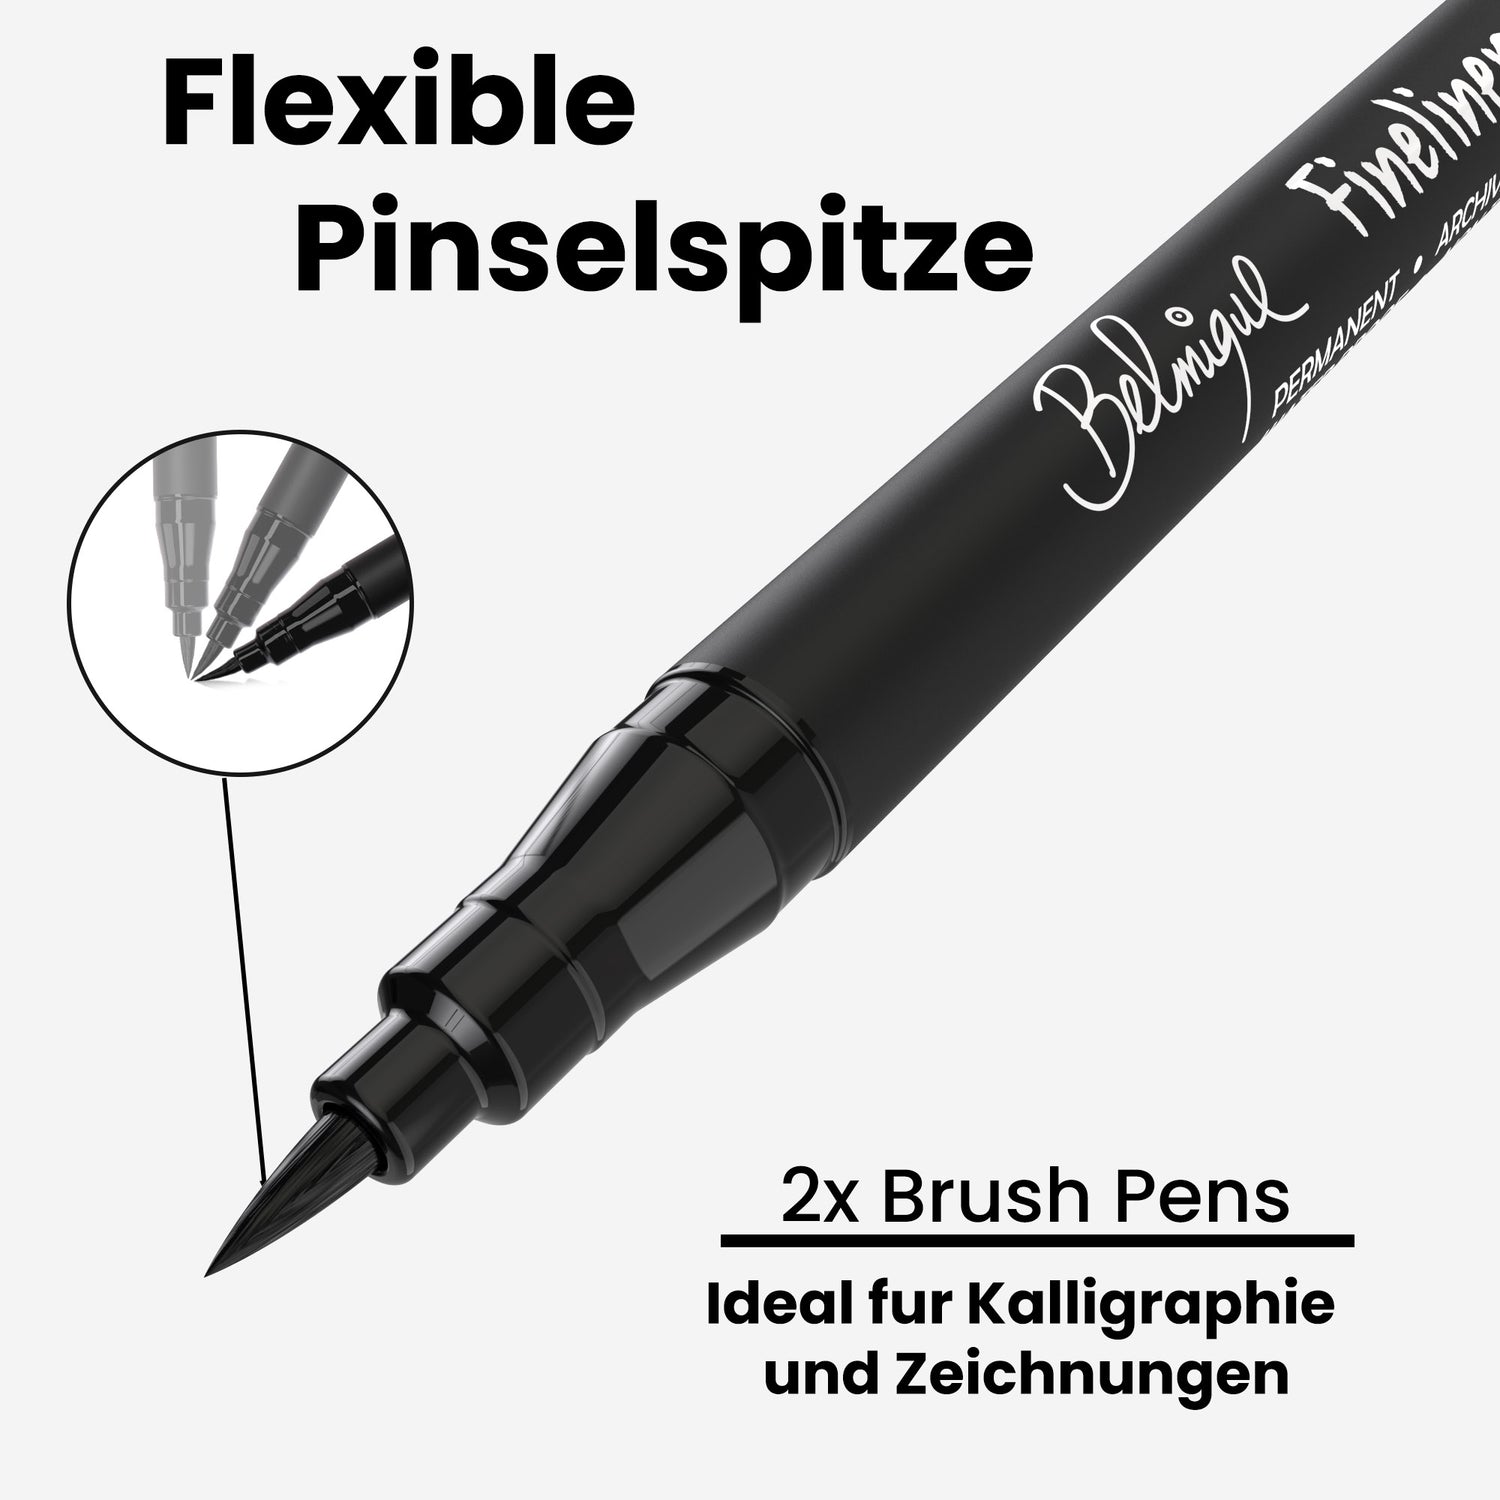 Belmique Brush Pens bzw. Pinselstifte sind flexible